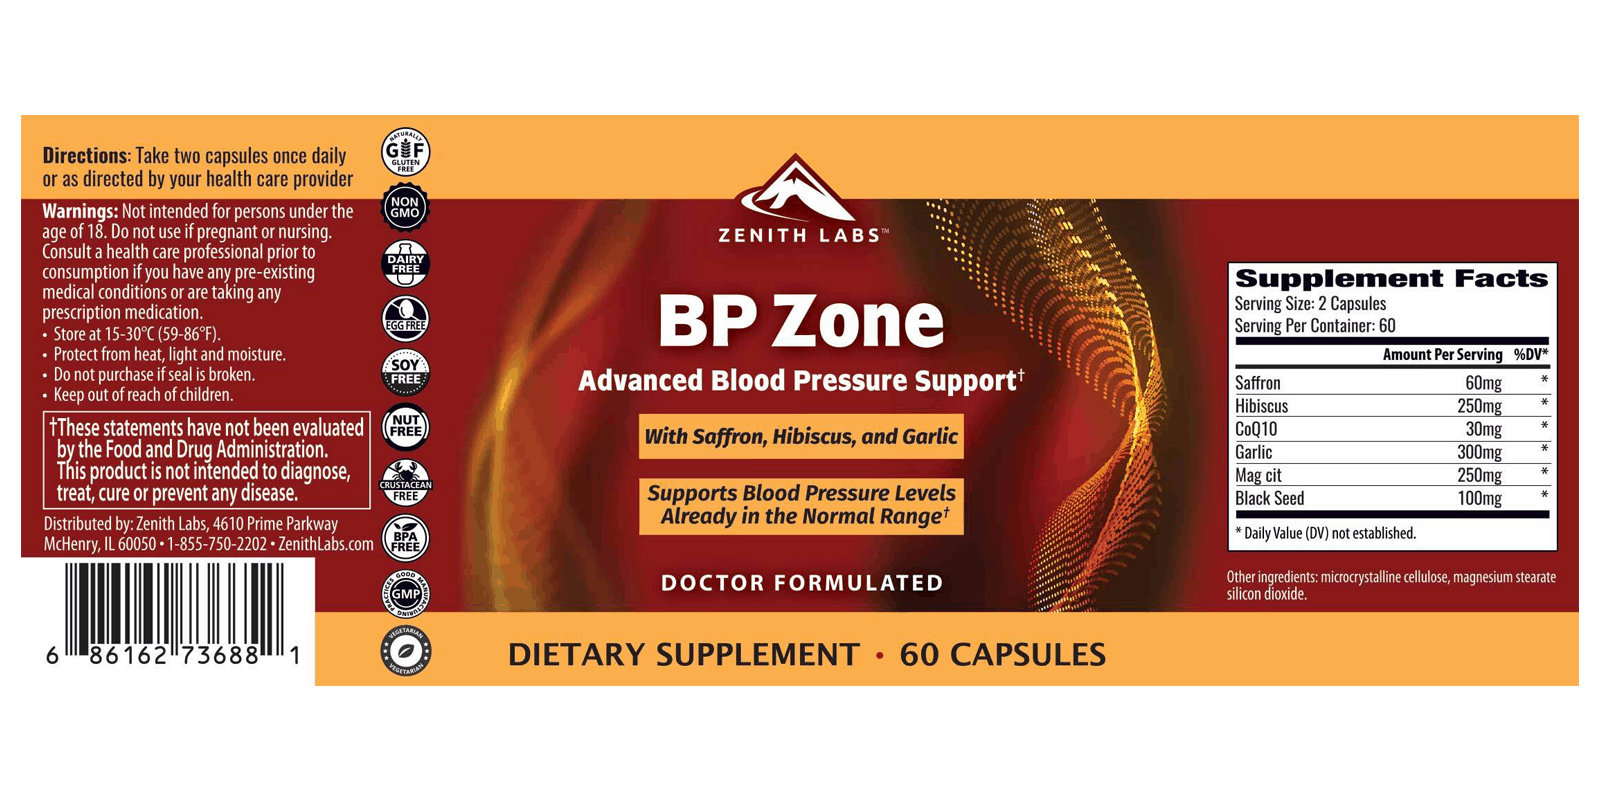 BP Zone dosage